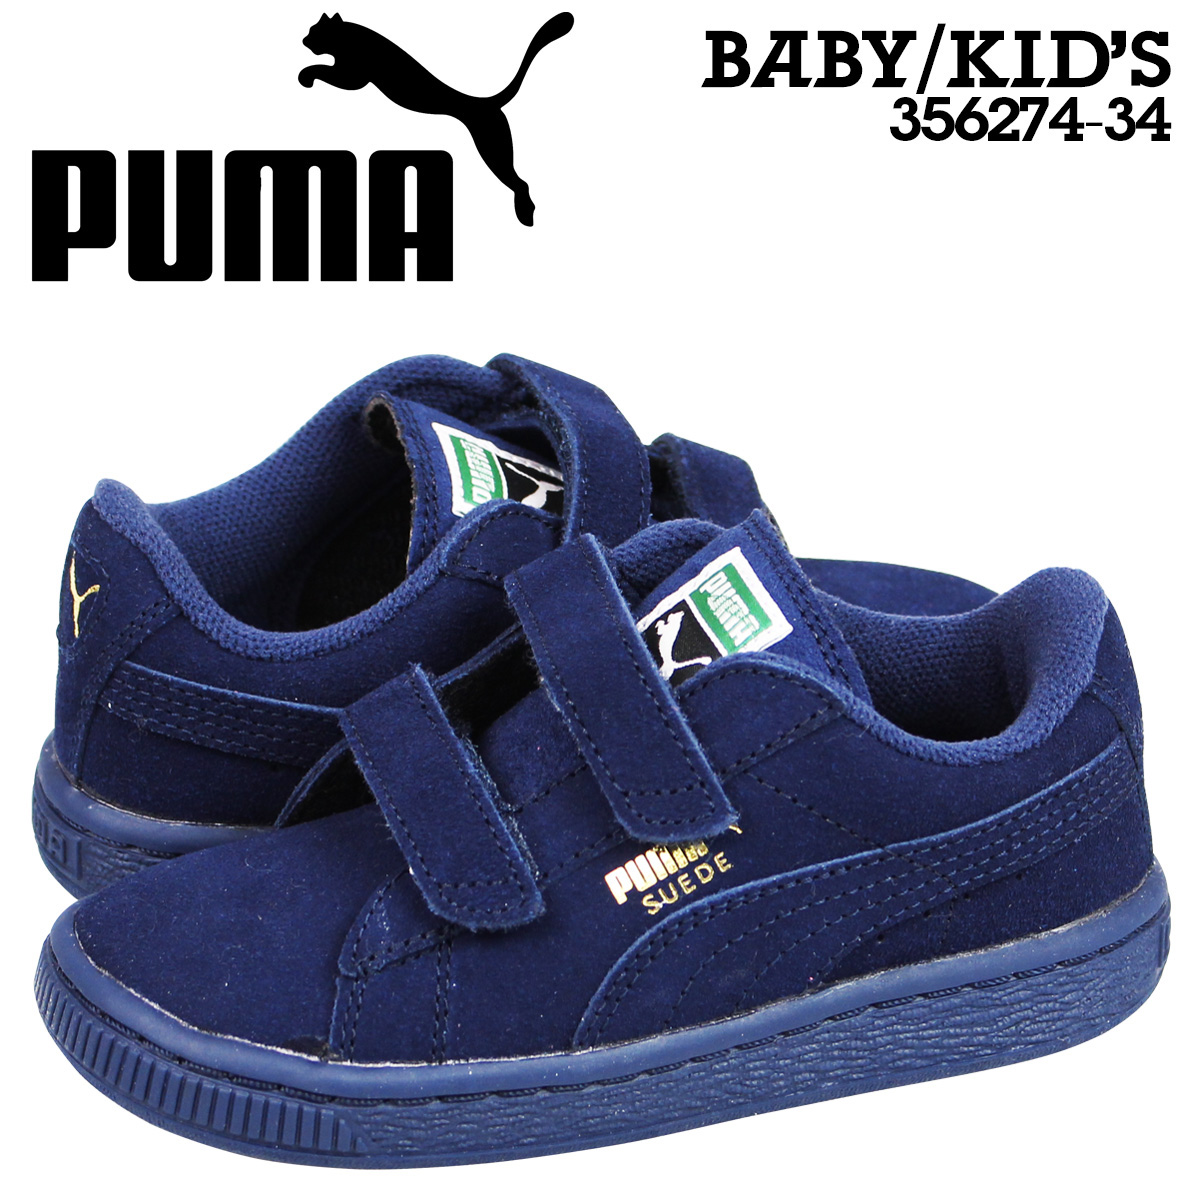 buy kids puma shoes online